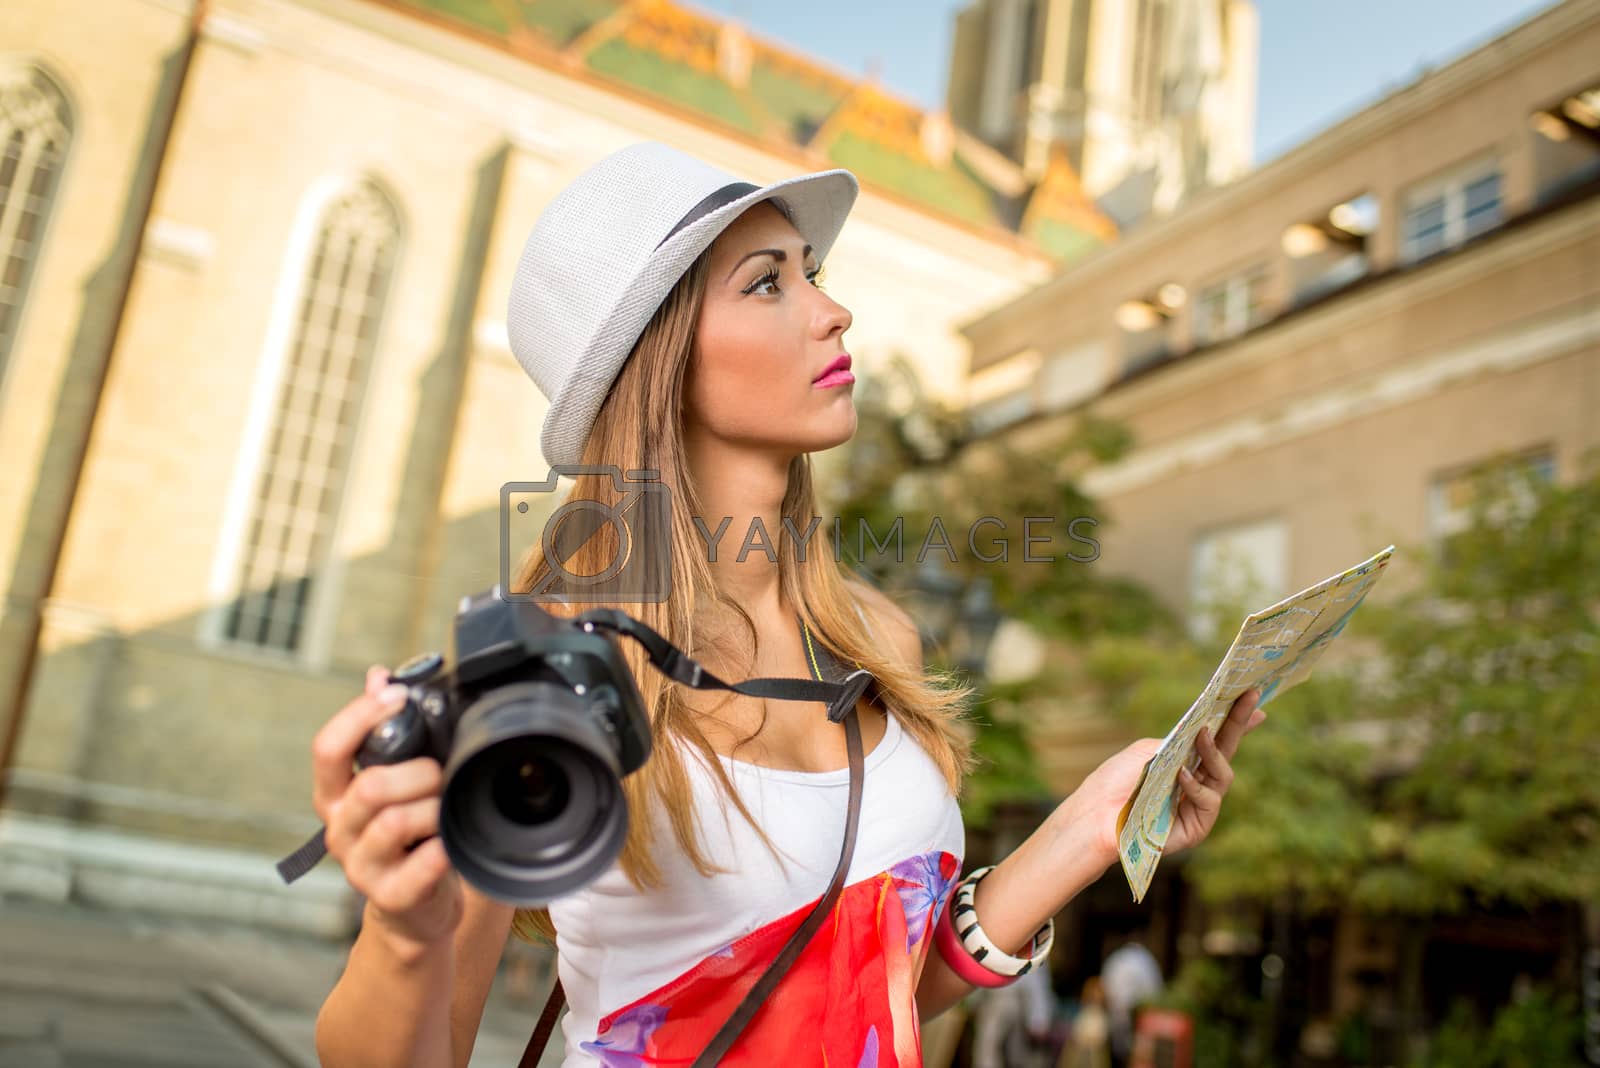 Royalty free image of Beautiful Woman Tourist by MilanMarkovic78